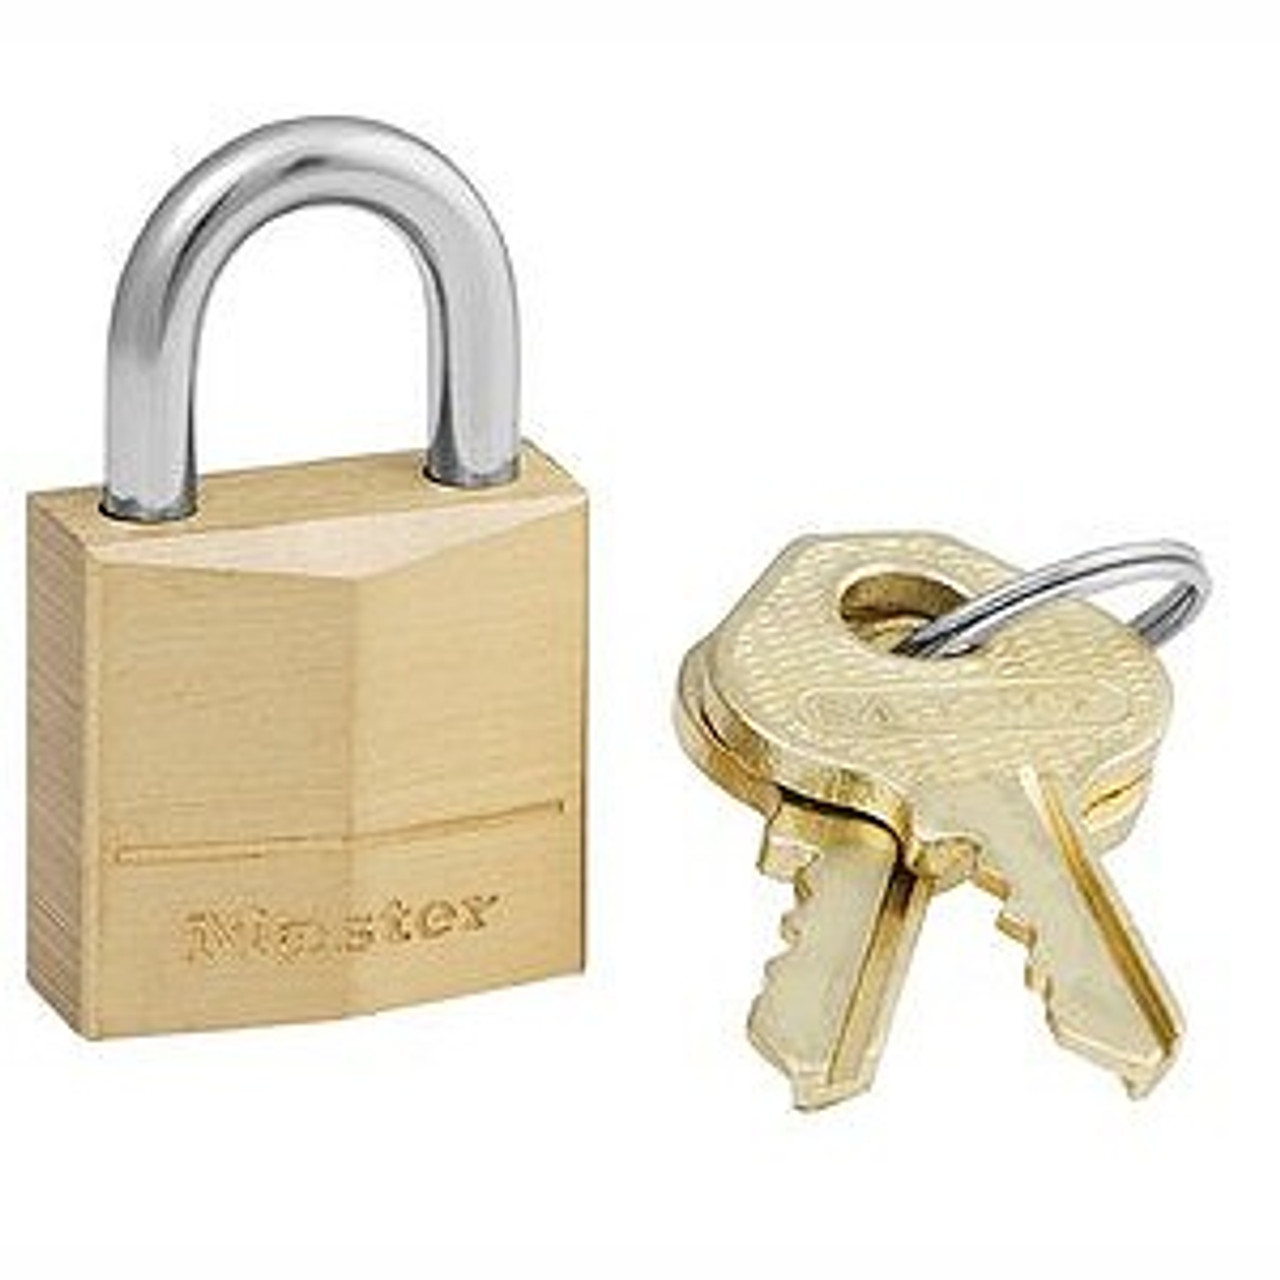 Master Lock 1KALF 2222 Padlock No. 1LF Locks Keyed Alike to KA